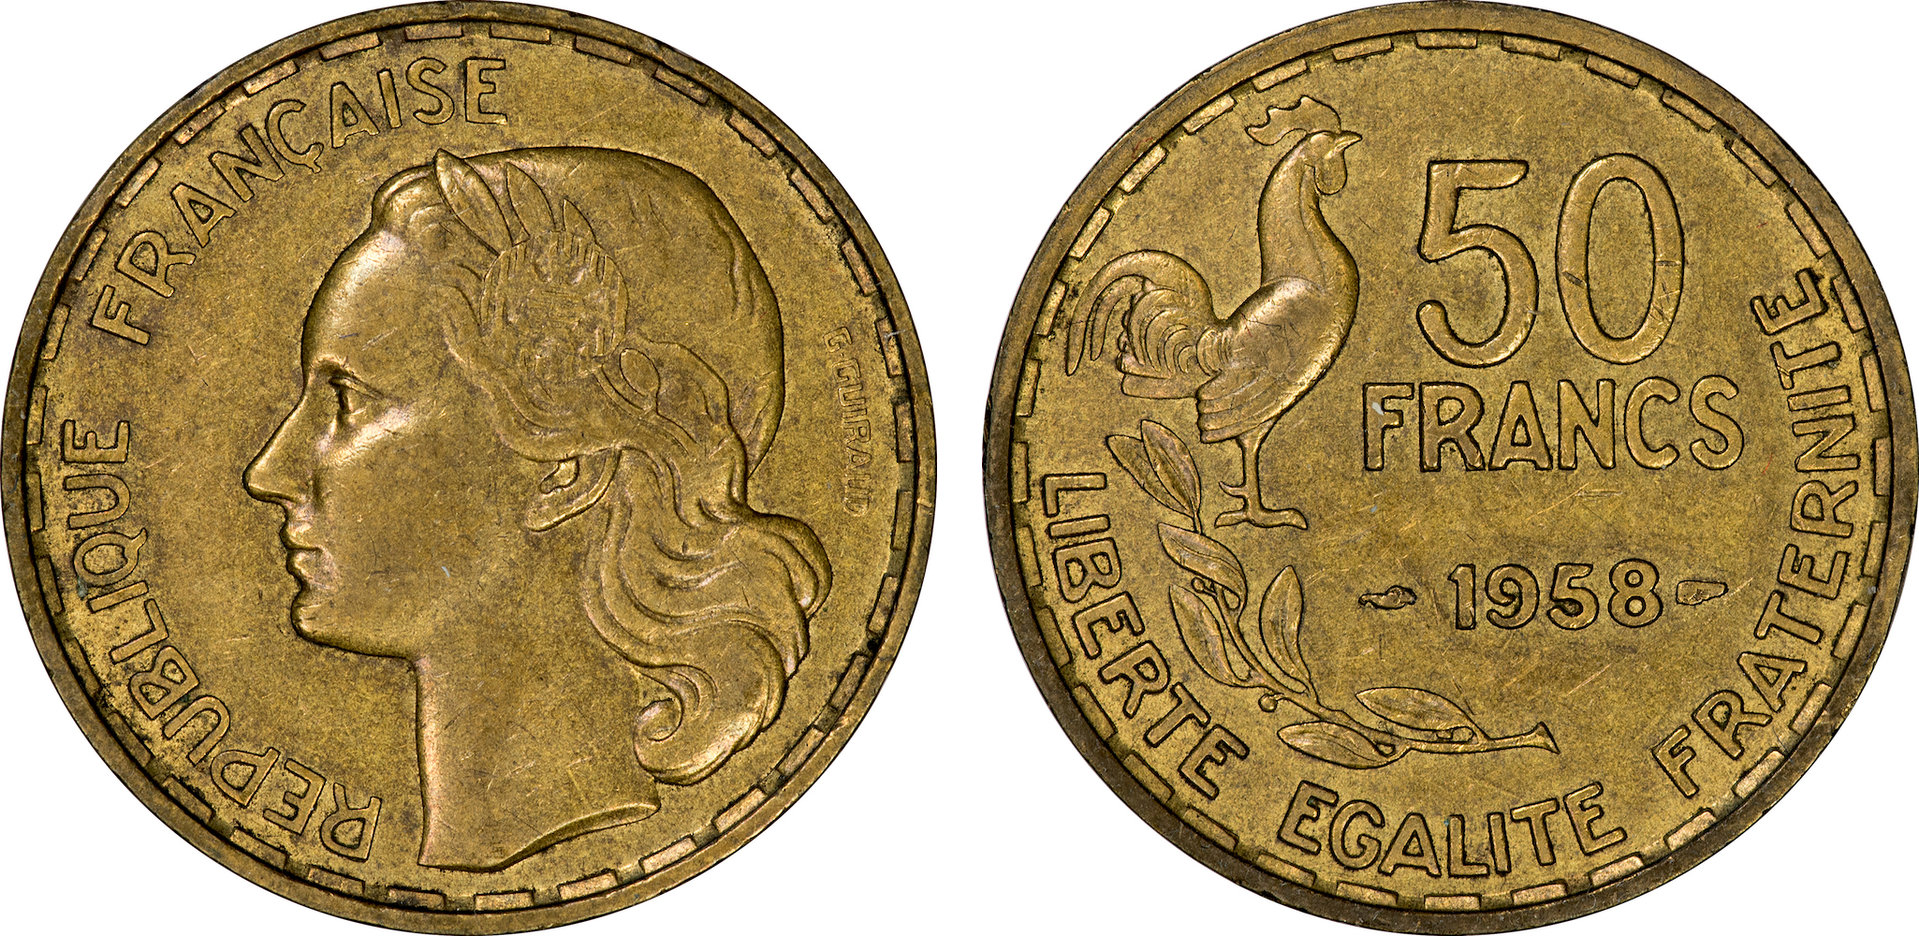 France - 1958 50 Francs.jpg